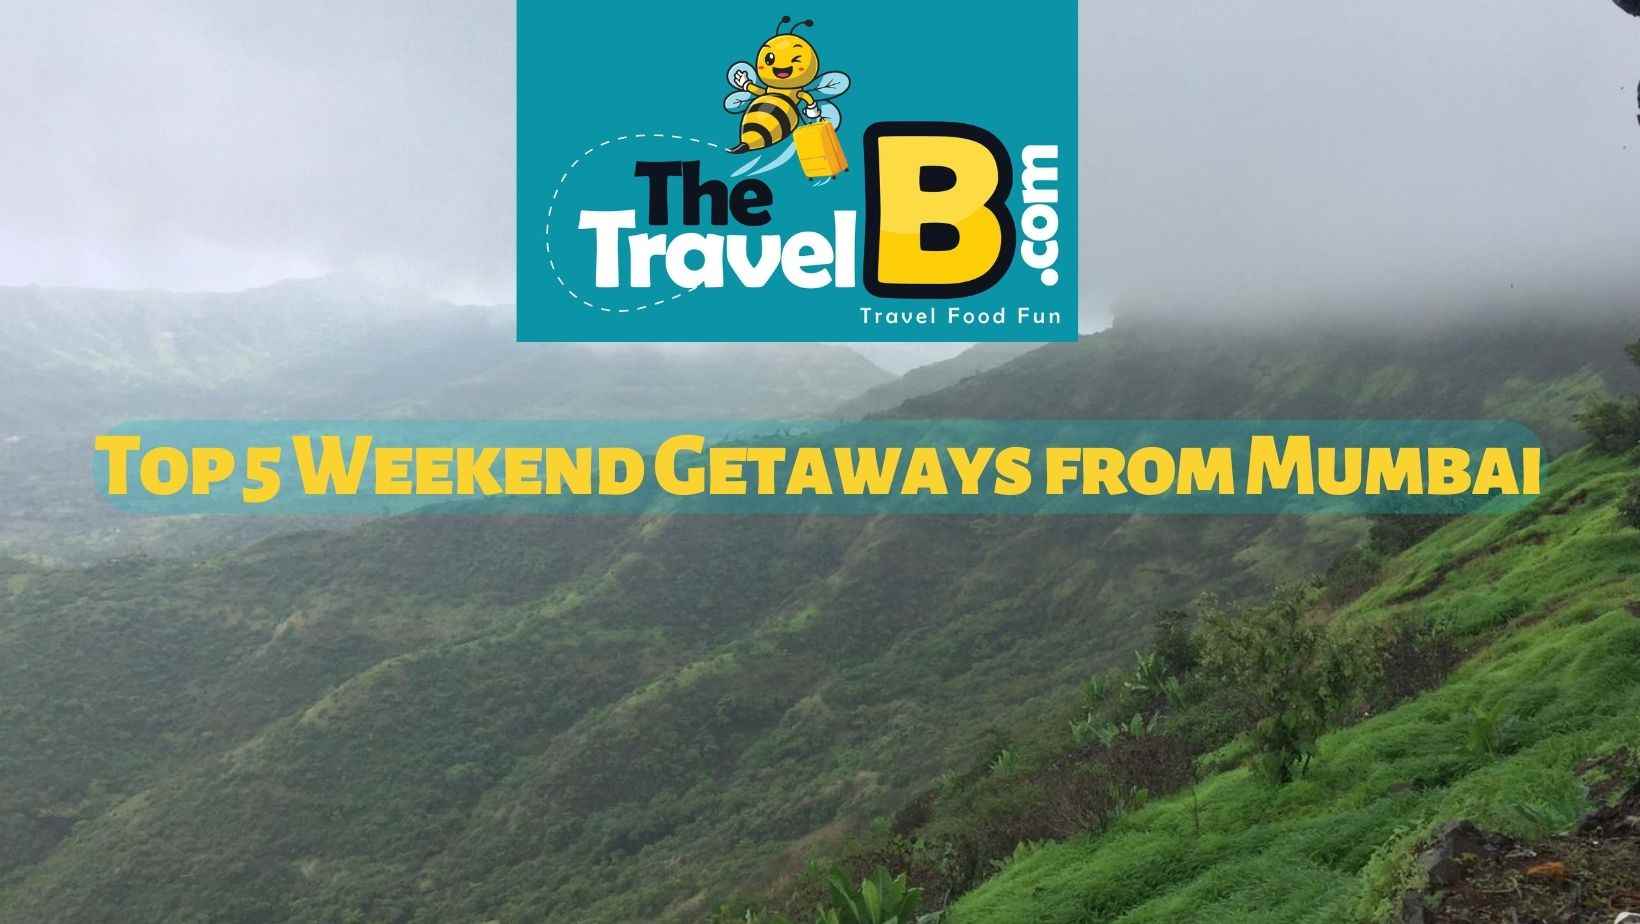 Top 5 Weekend Getaways from Mumbai